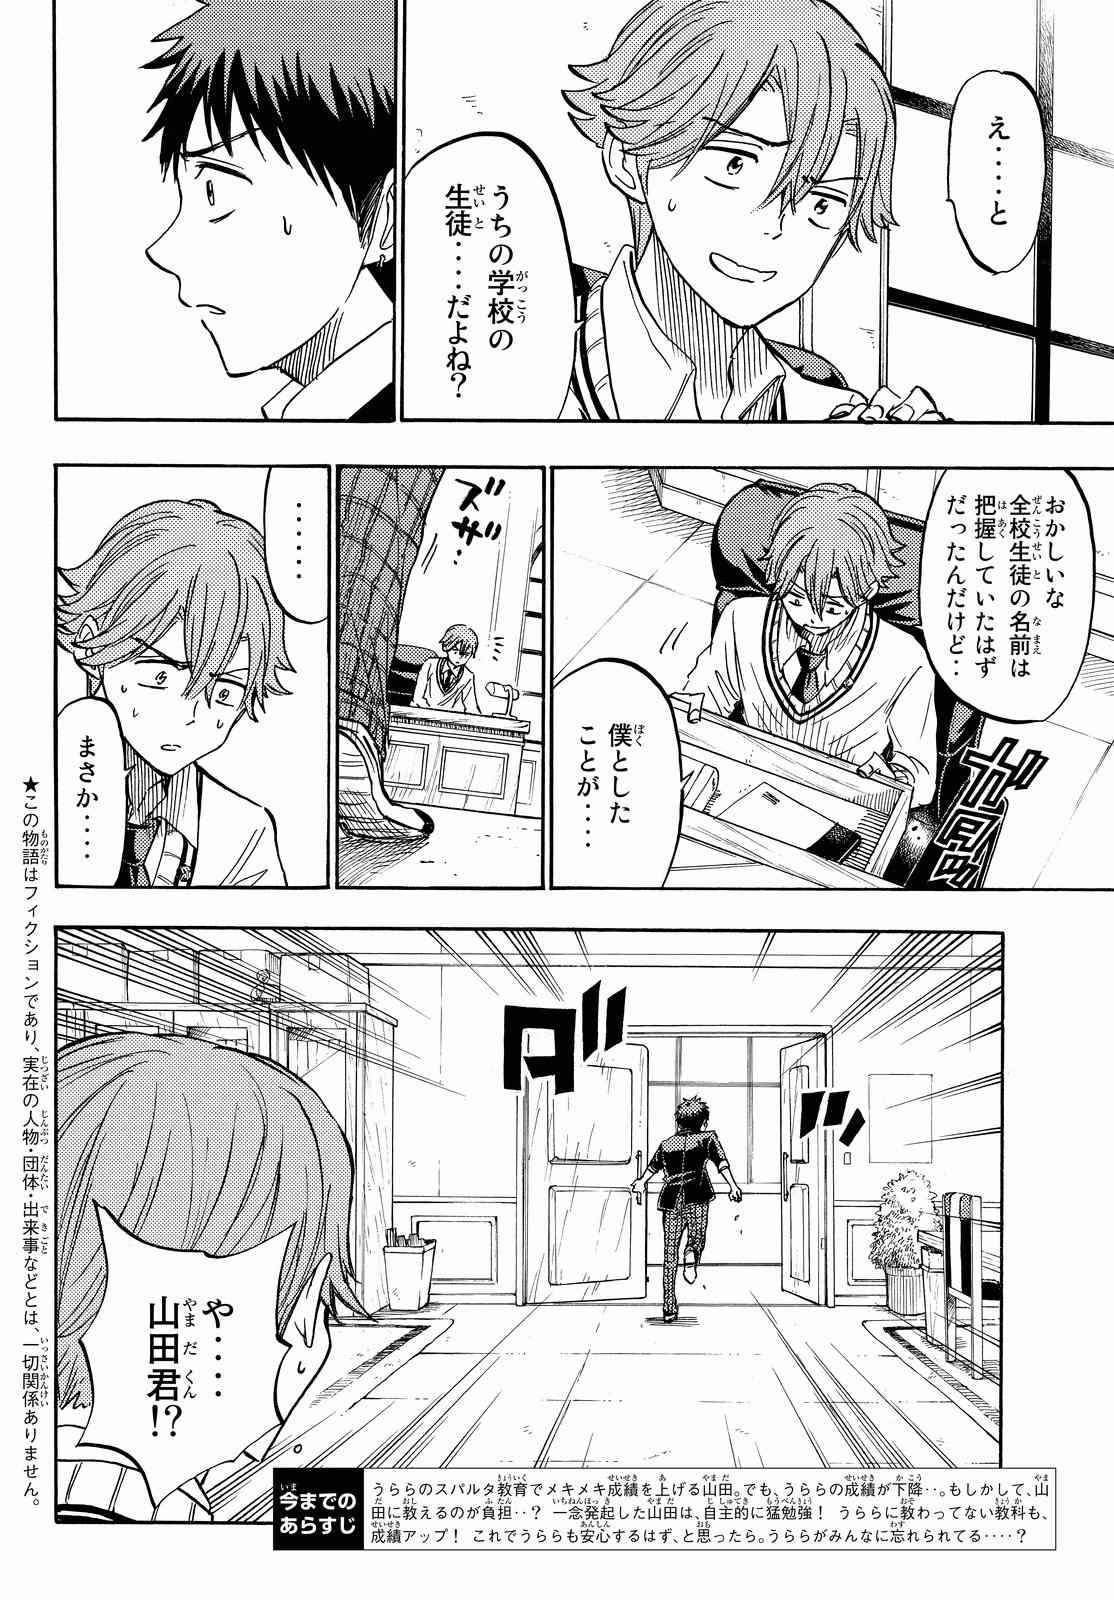 Yamada-kun to 7-nin no Majo - Chapter 236 - Page 2